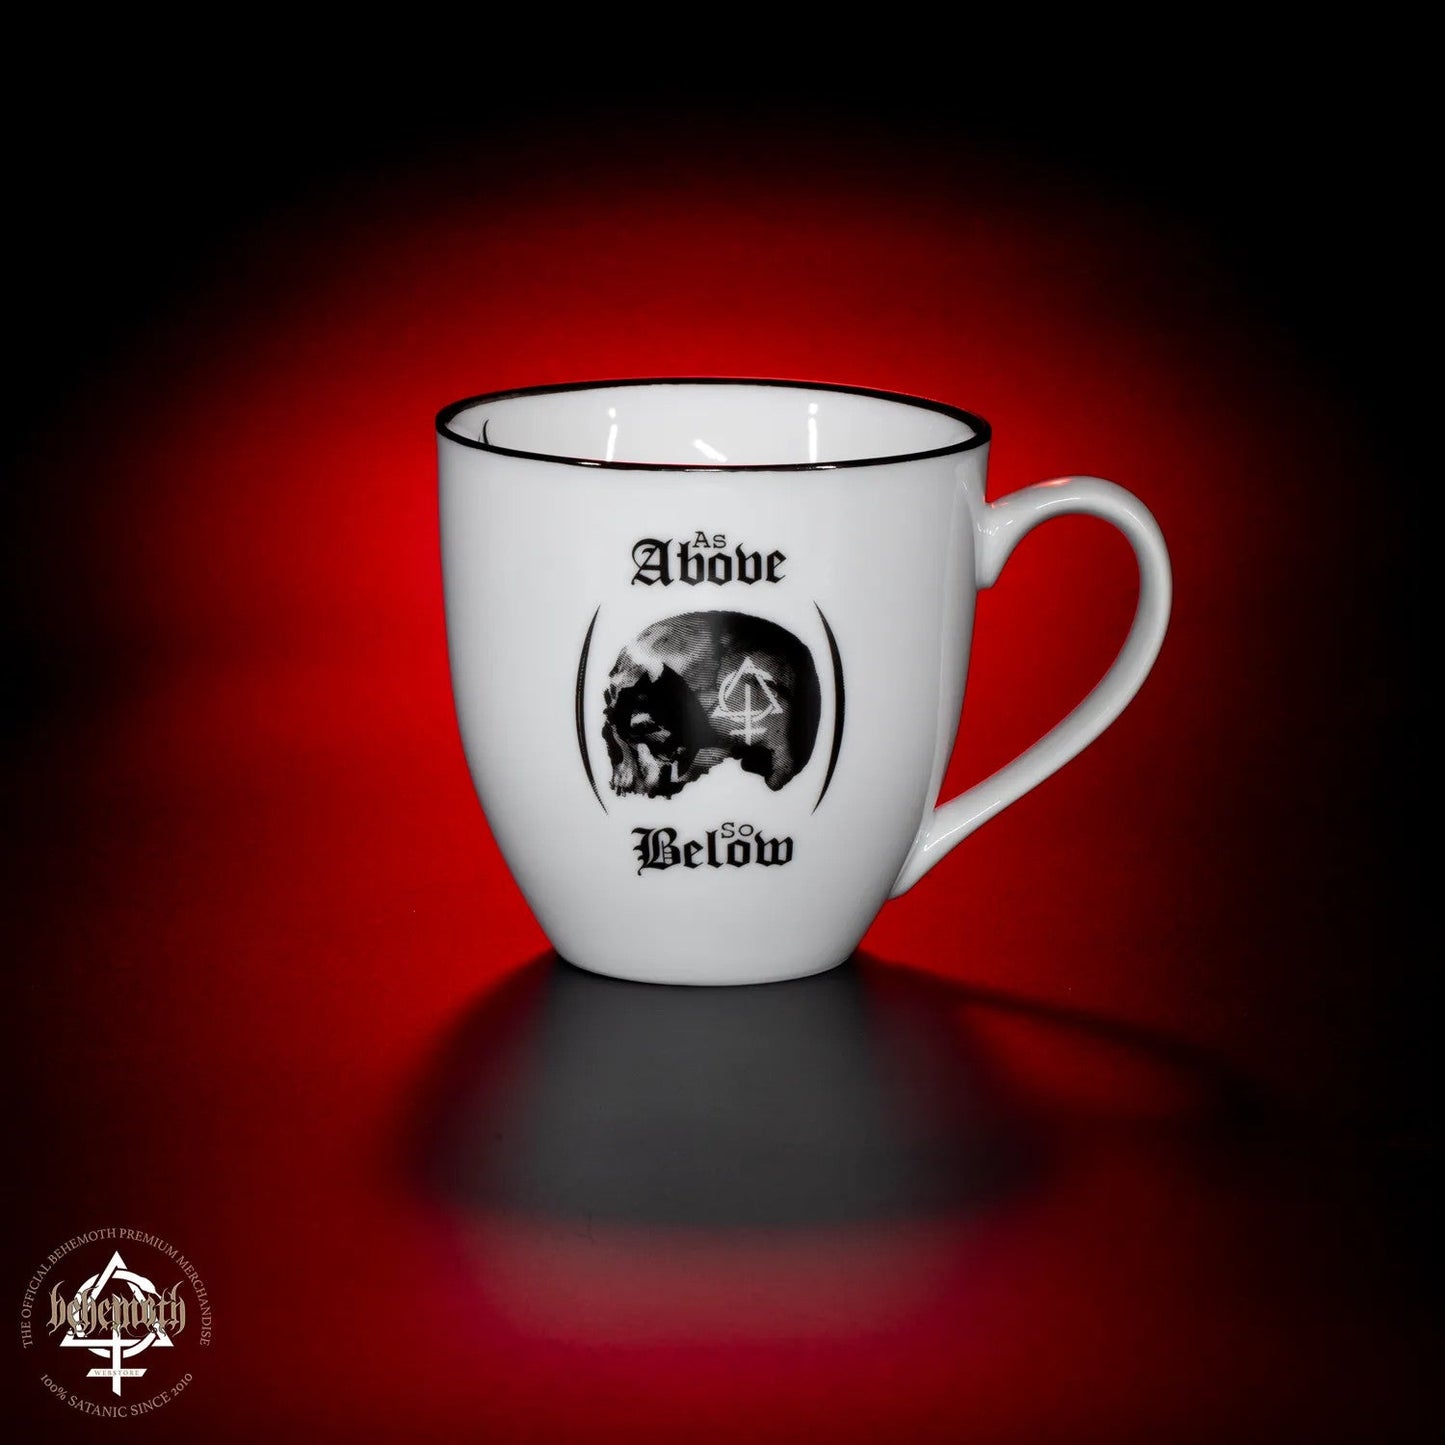 Behemoth 'The Devil Save The Queen' mug